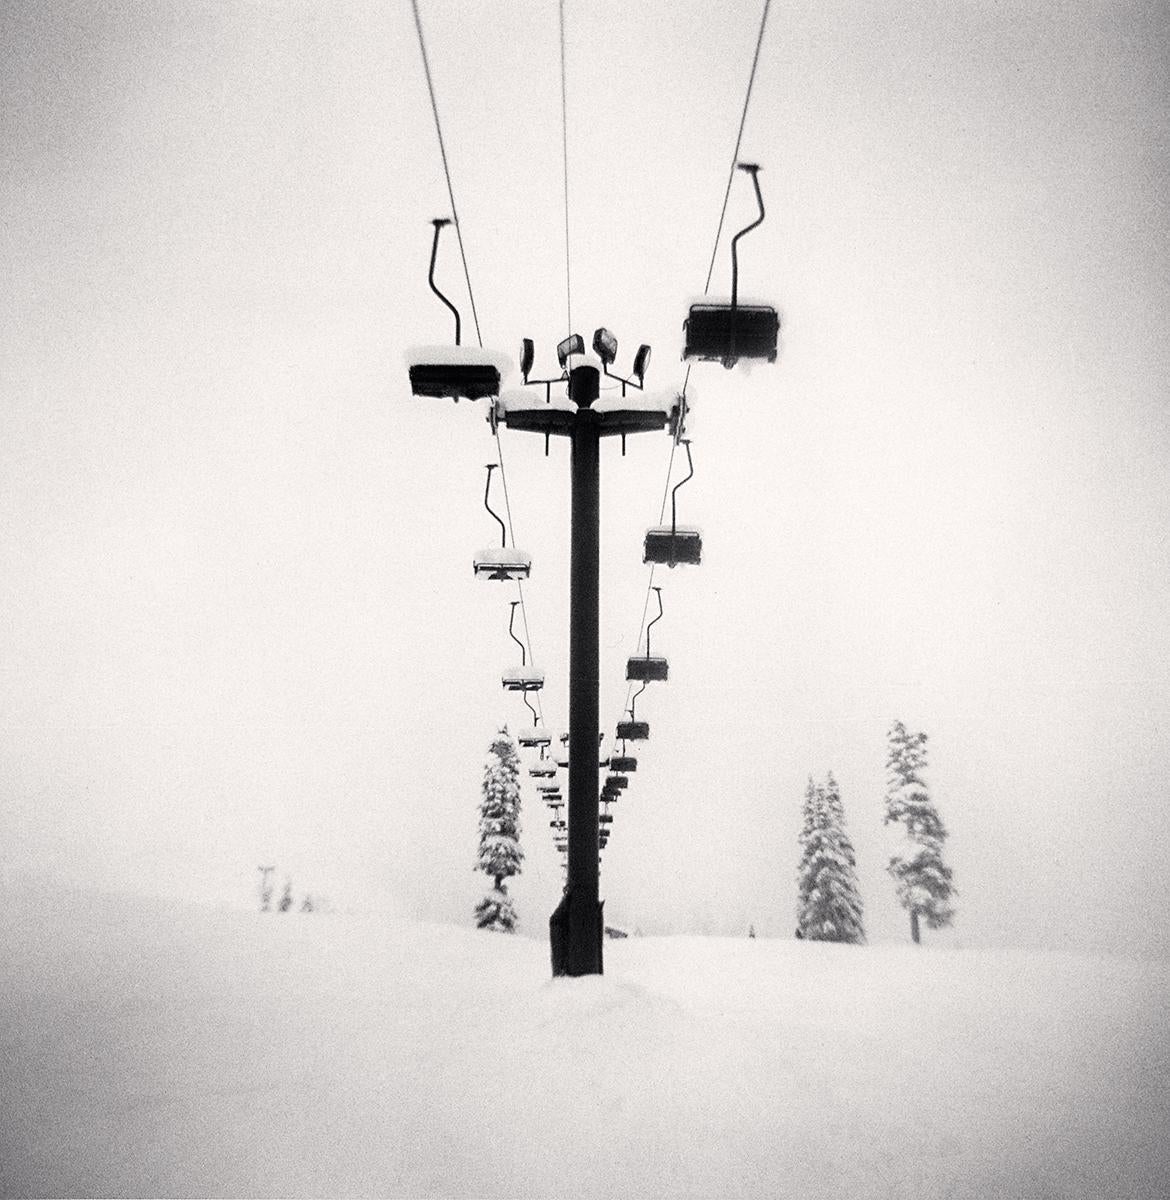 Michael Kenna Black and White Photograph – Stuhllift, Snowqualmie, Washington, USA